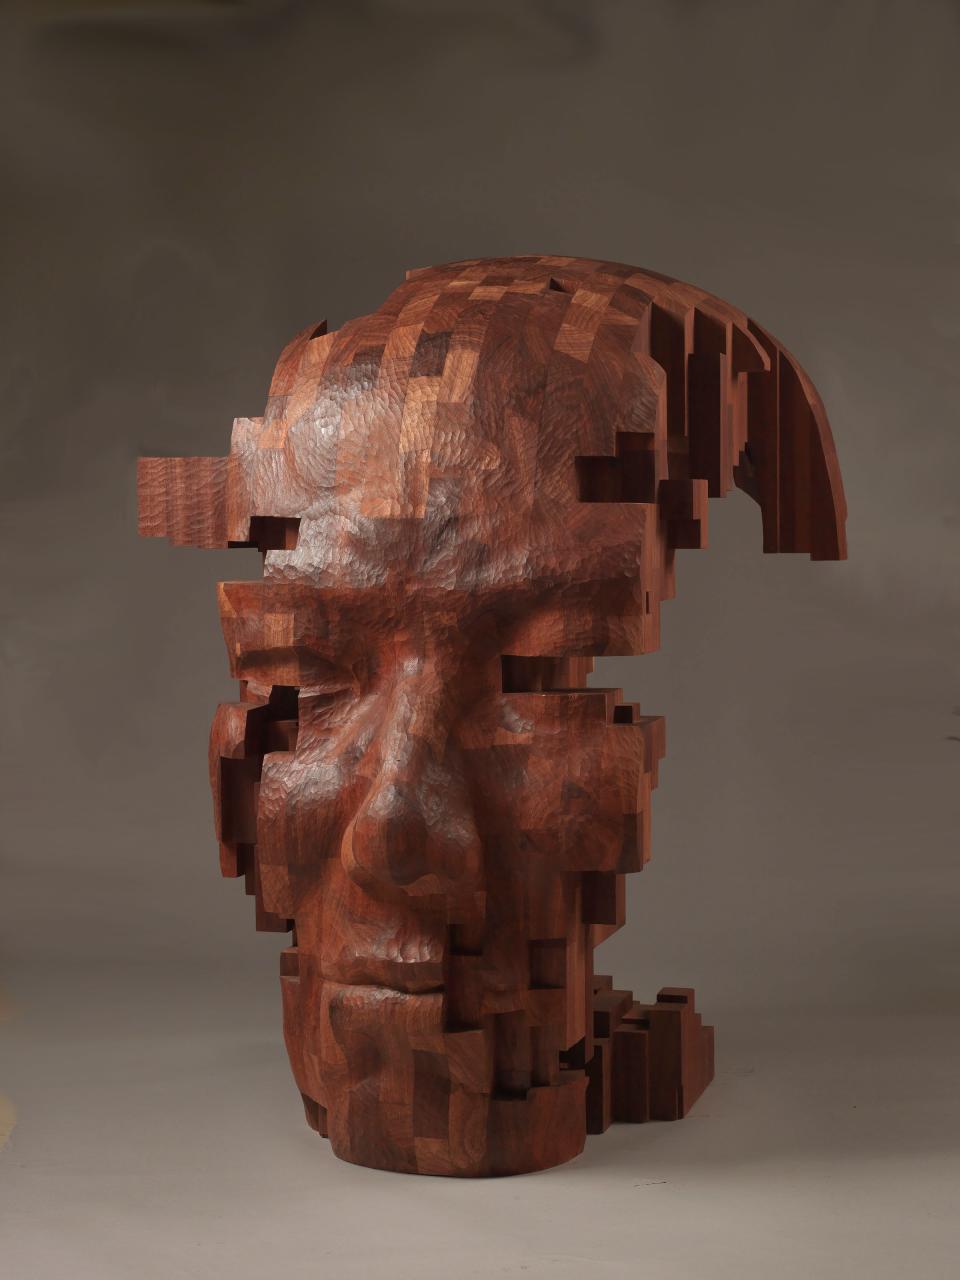 Splendid Wood Sculptures Of Pixelated Figures By Hsu Tung Han 9